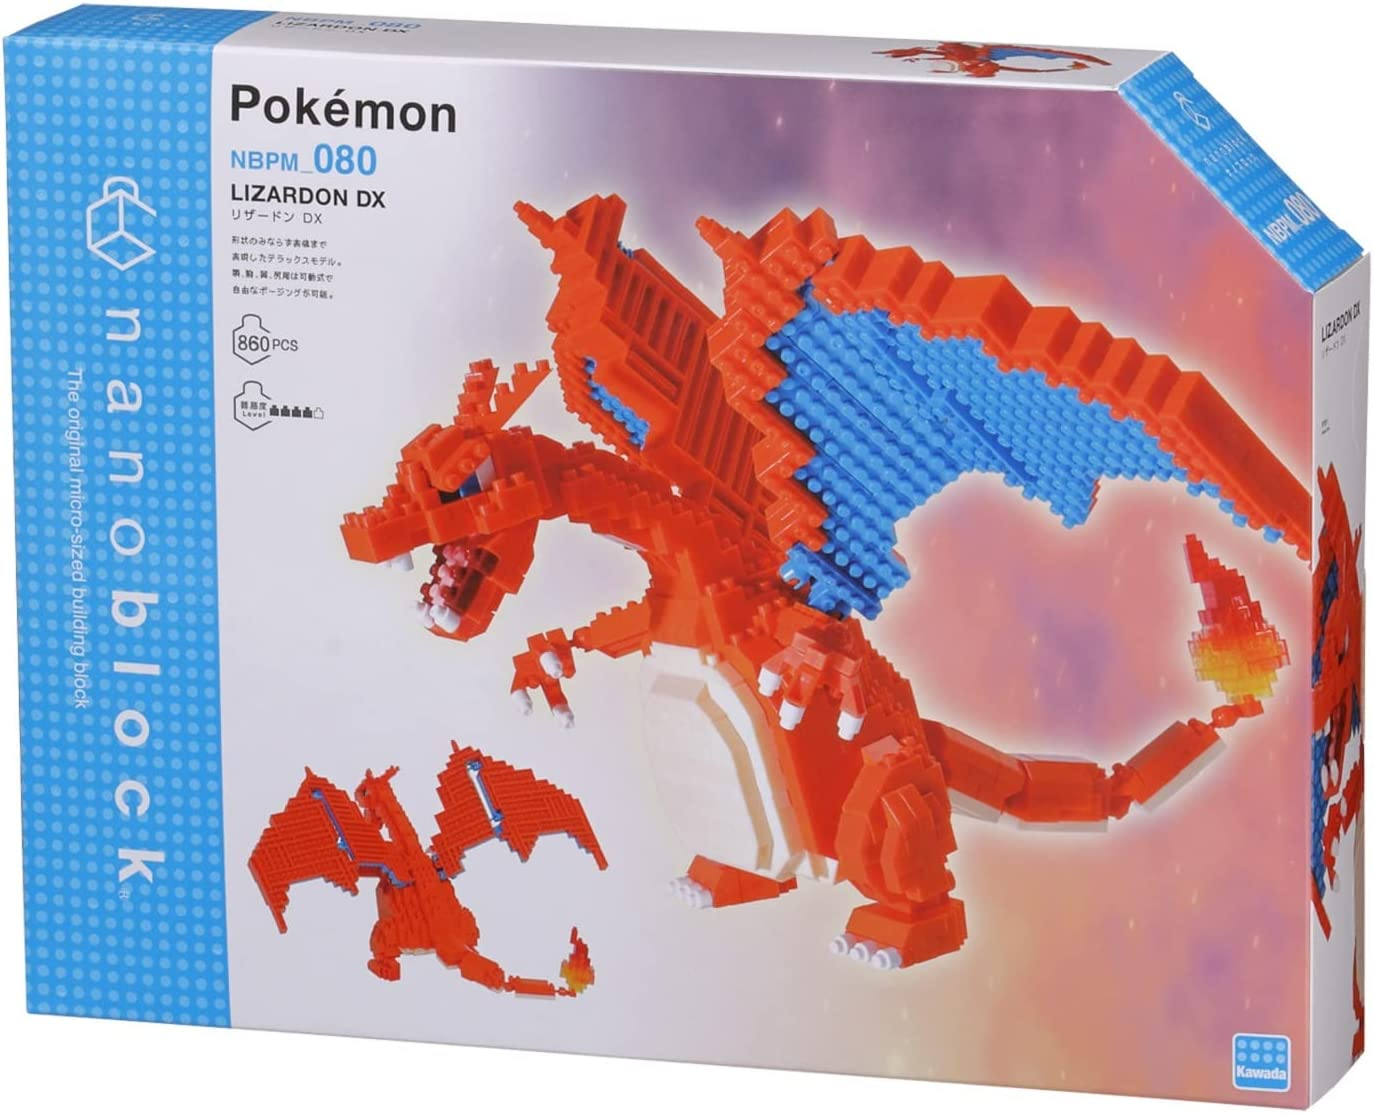 Pokemon Charizard Deluxe Nanoblock, Pokémon Series Building Kit, Ages 15+, 770 pieces